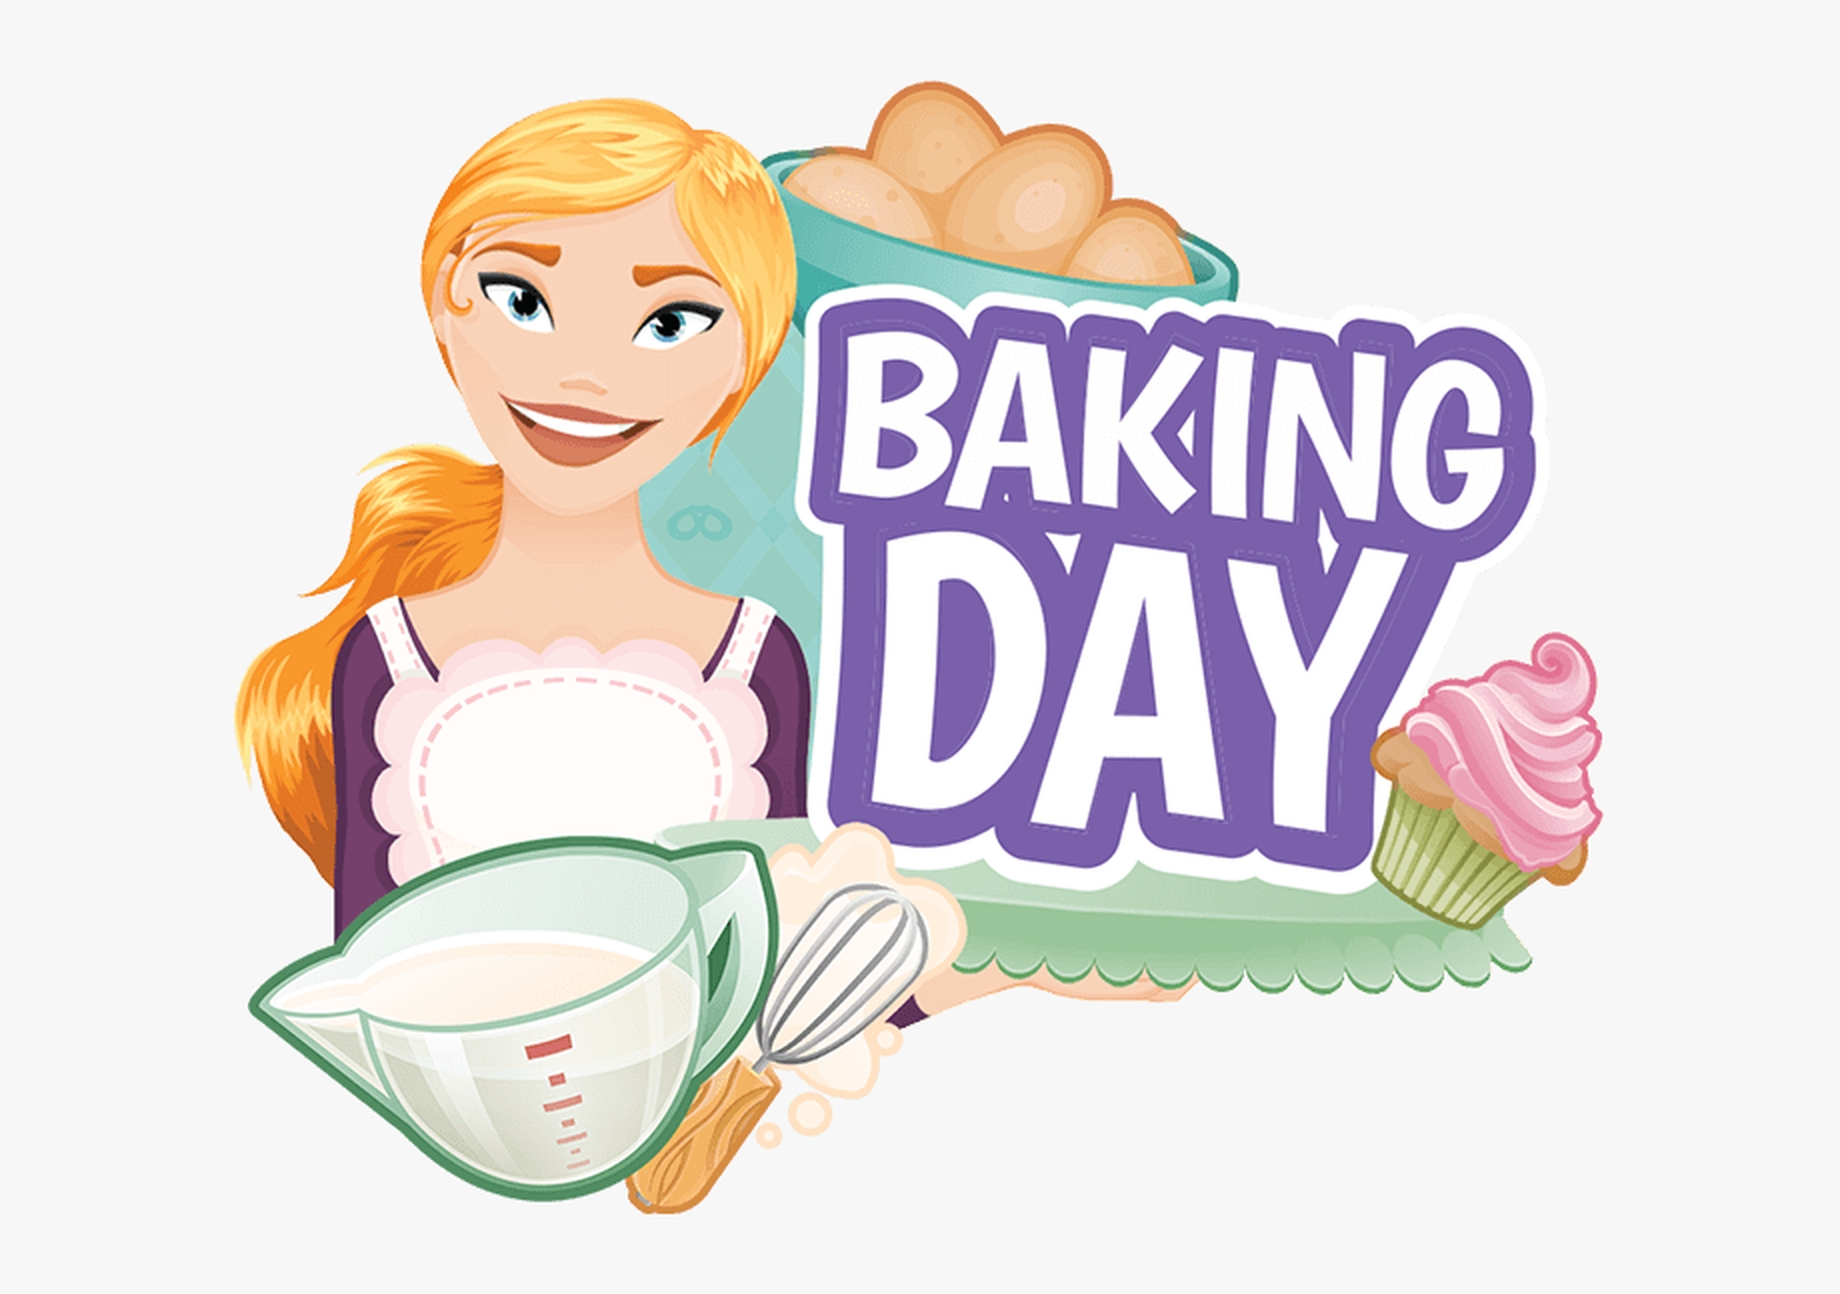 Baking Day demo